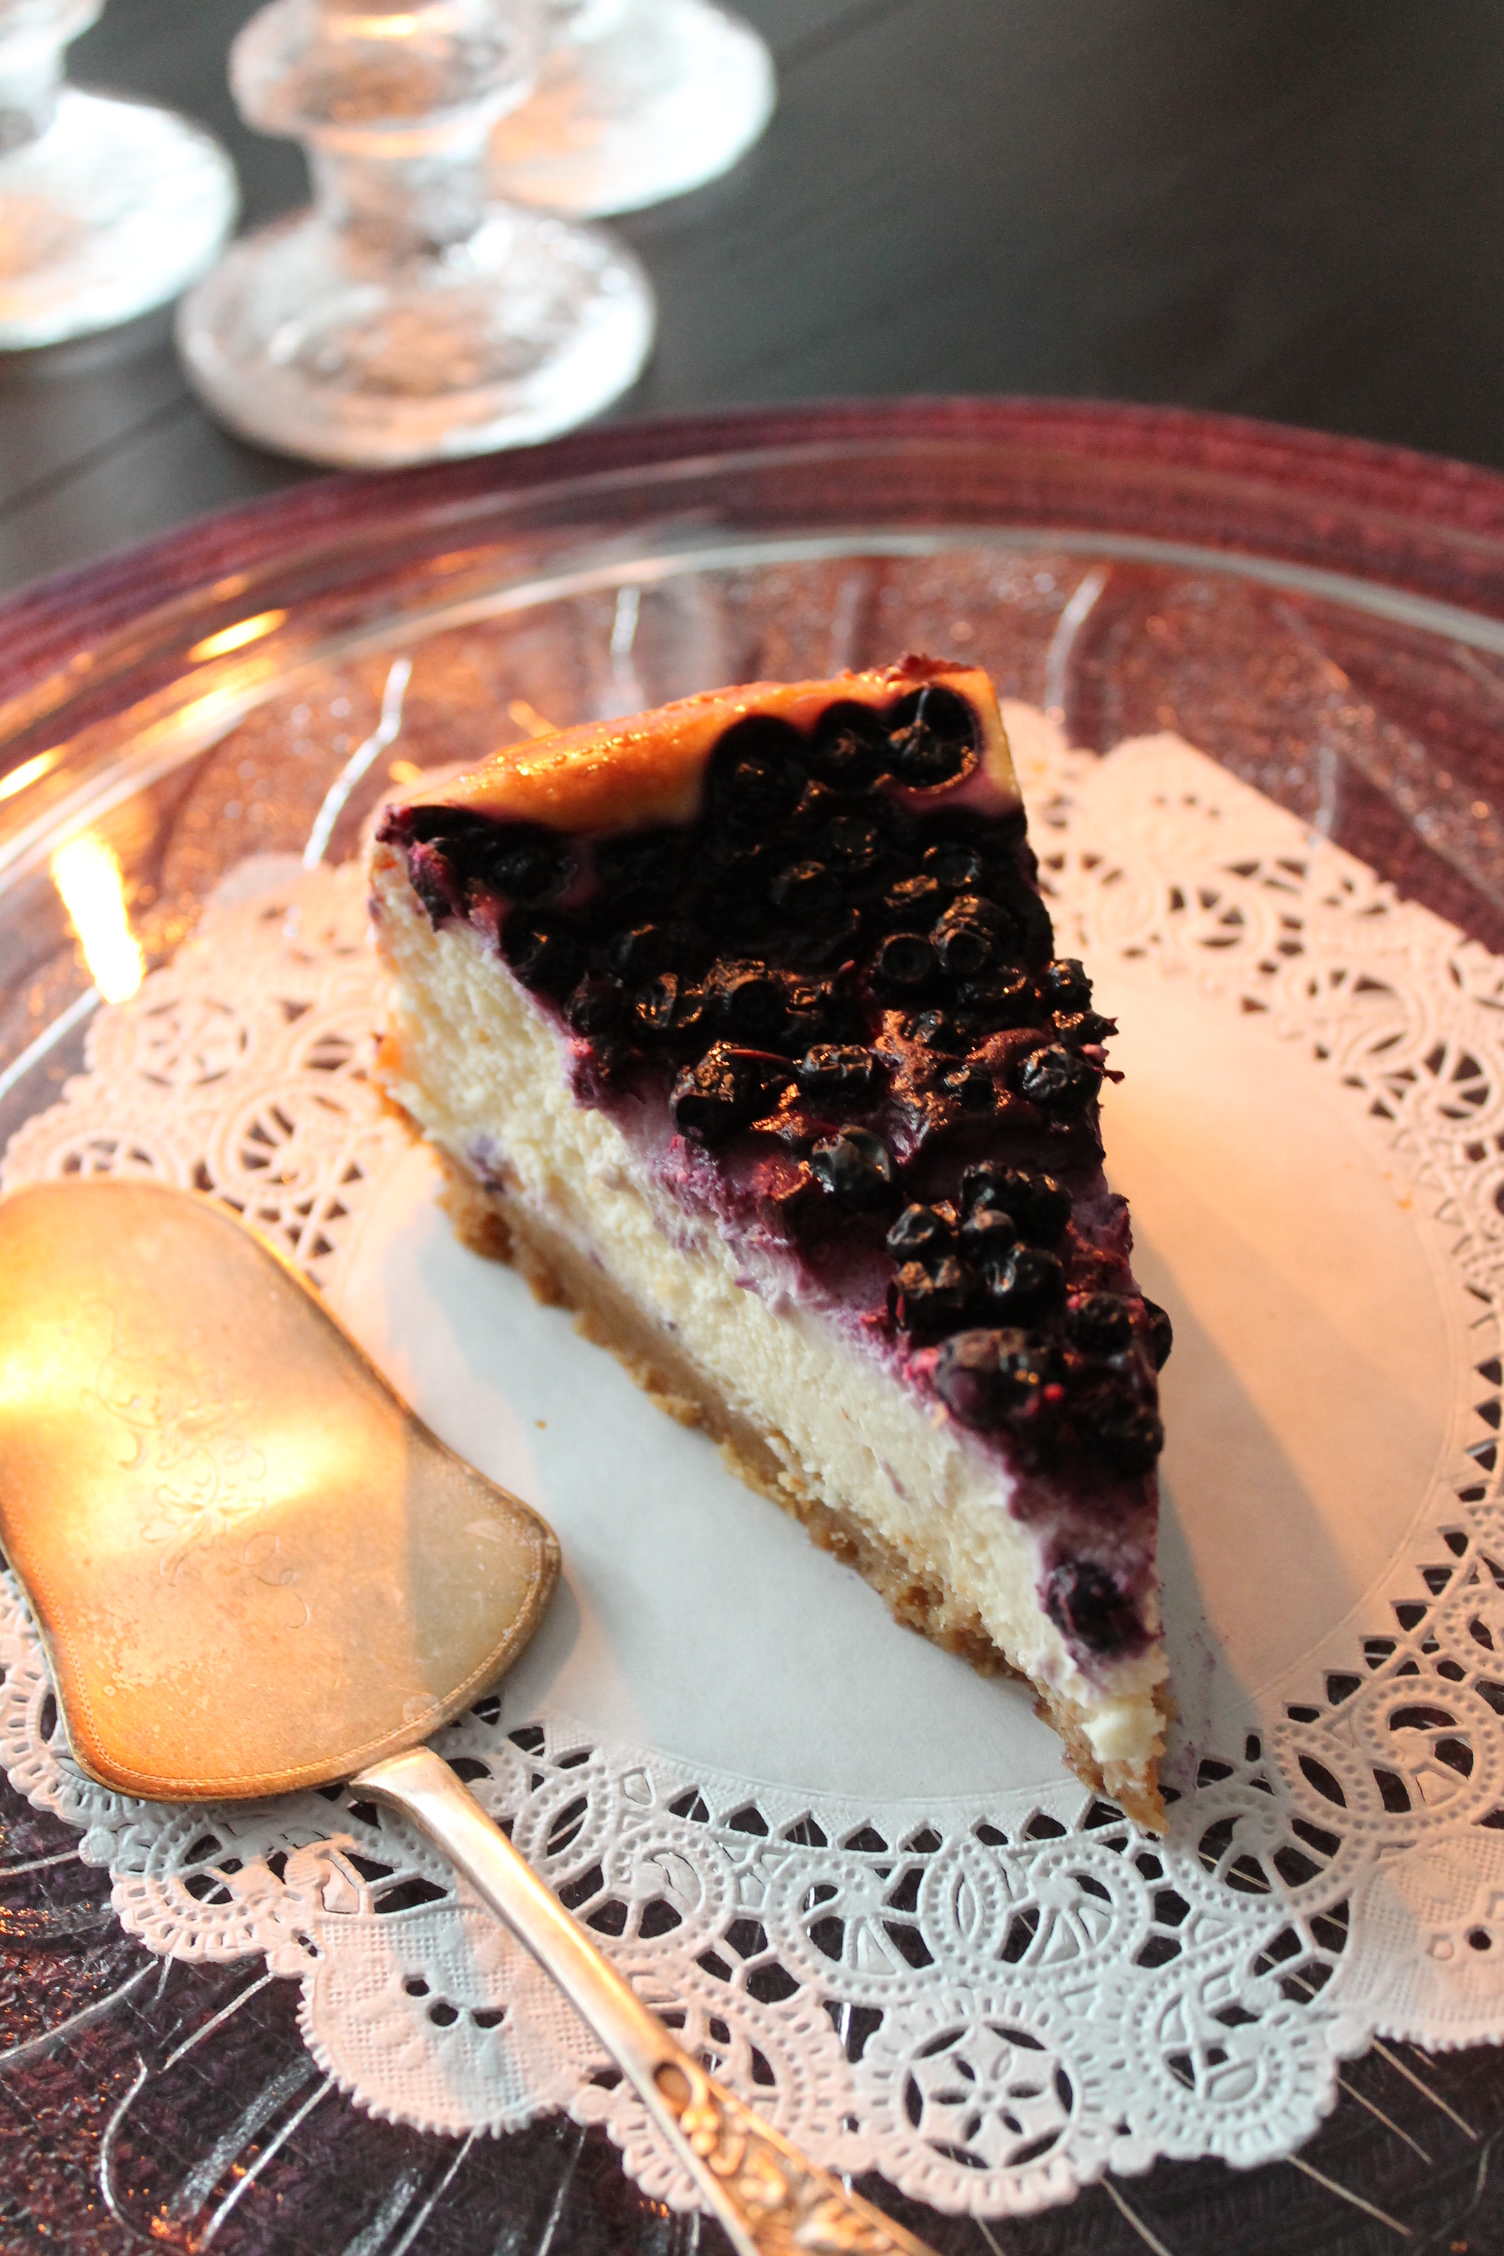 Cheesecake-blåbär-vitchoklad